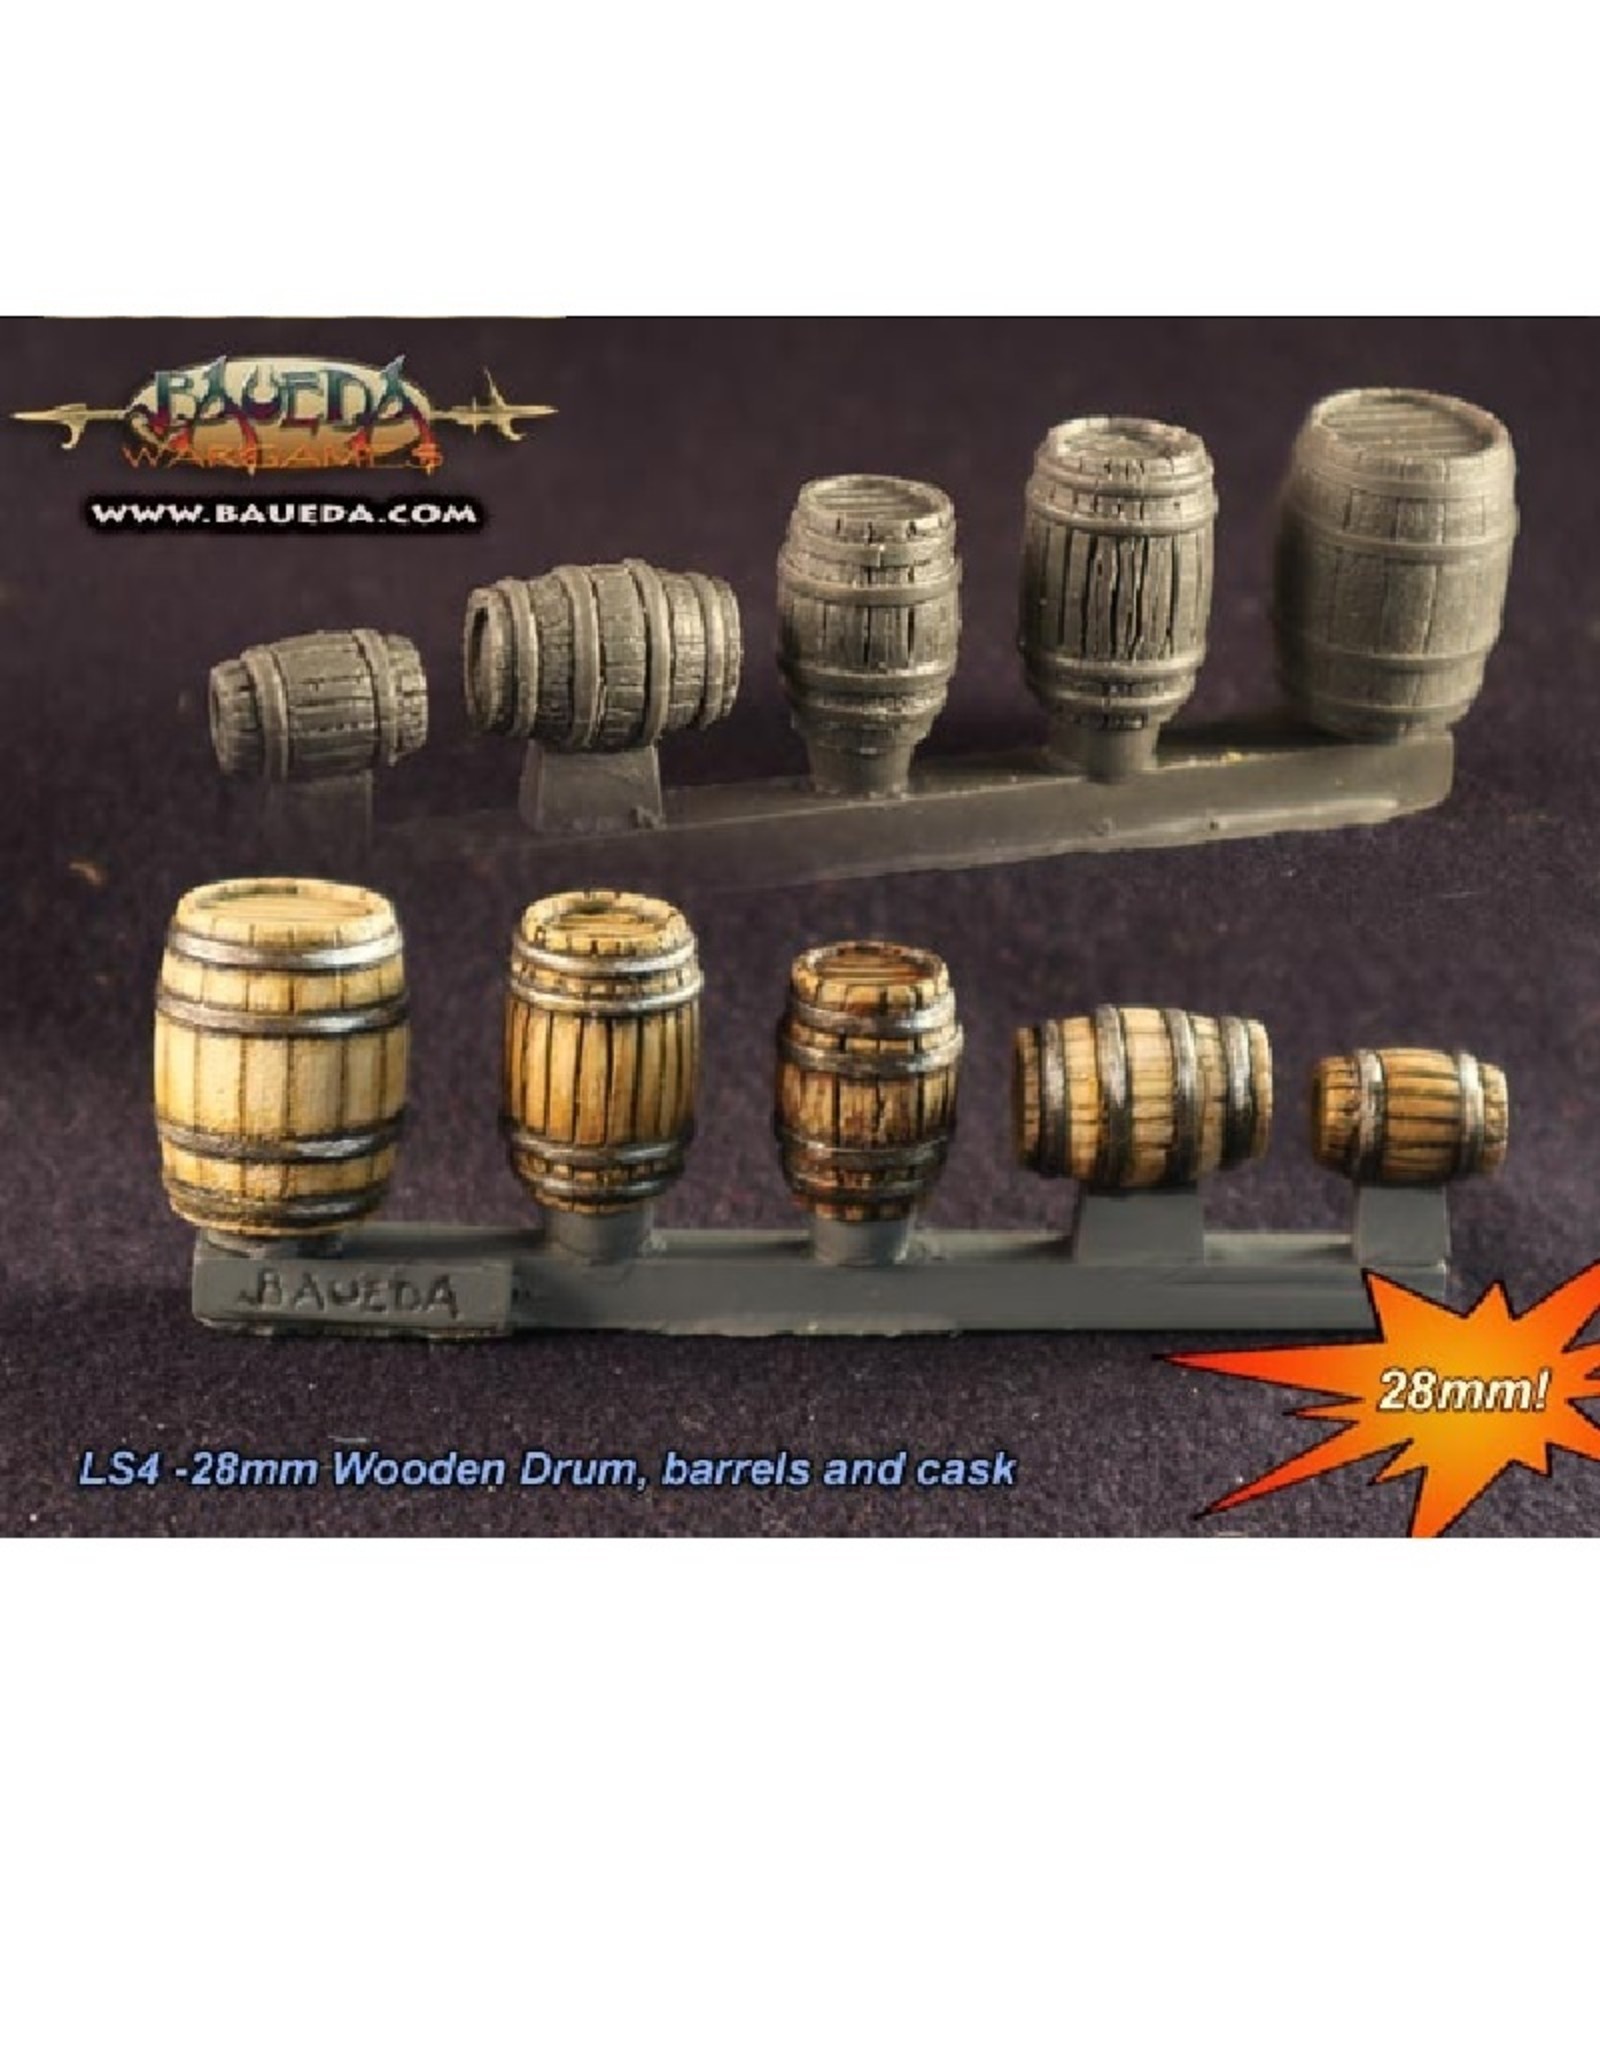 Baueda Wooden Drum, barrels and cask (28mm)